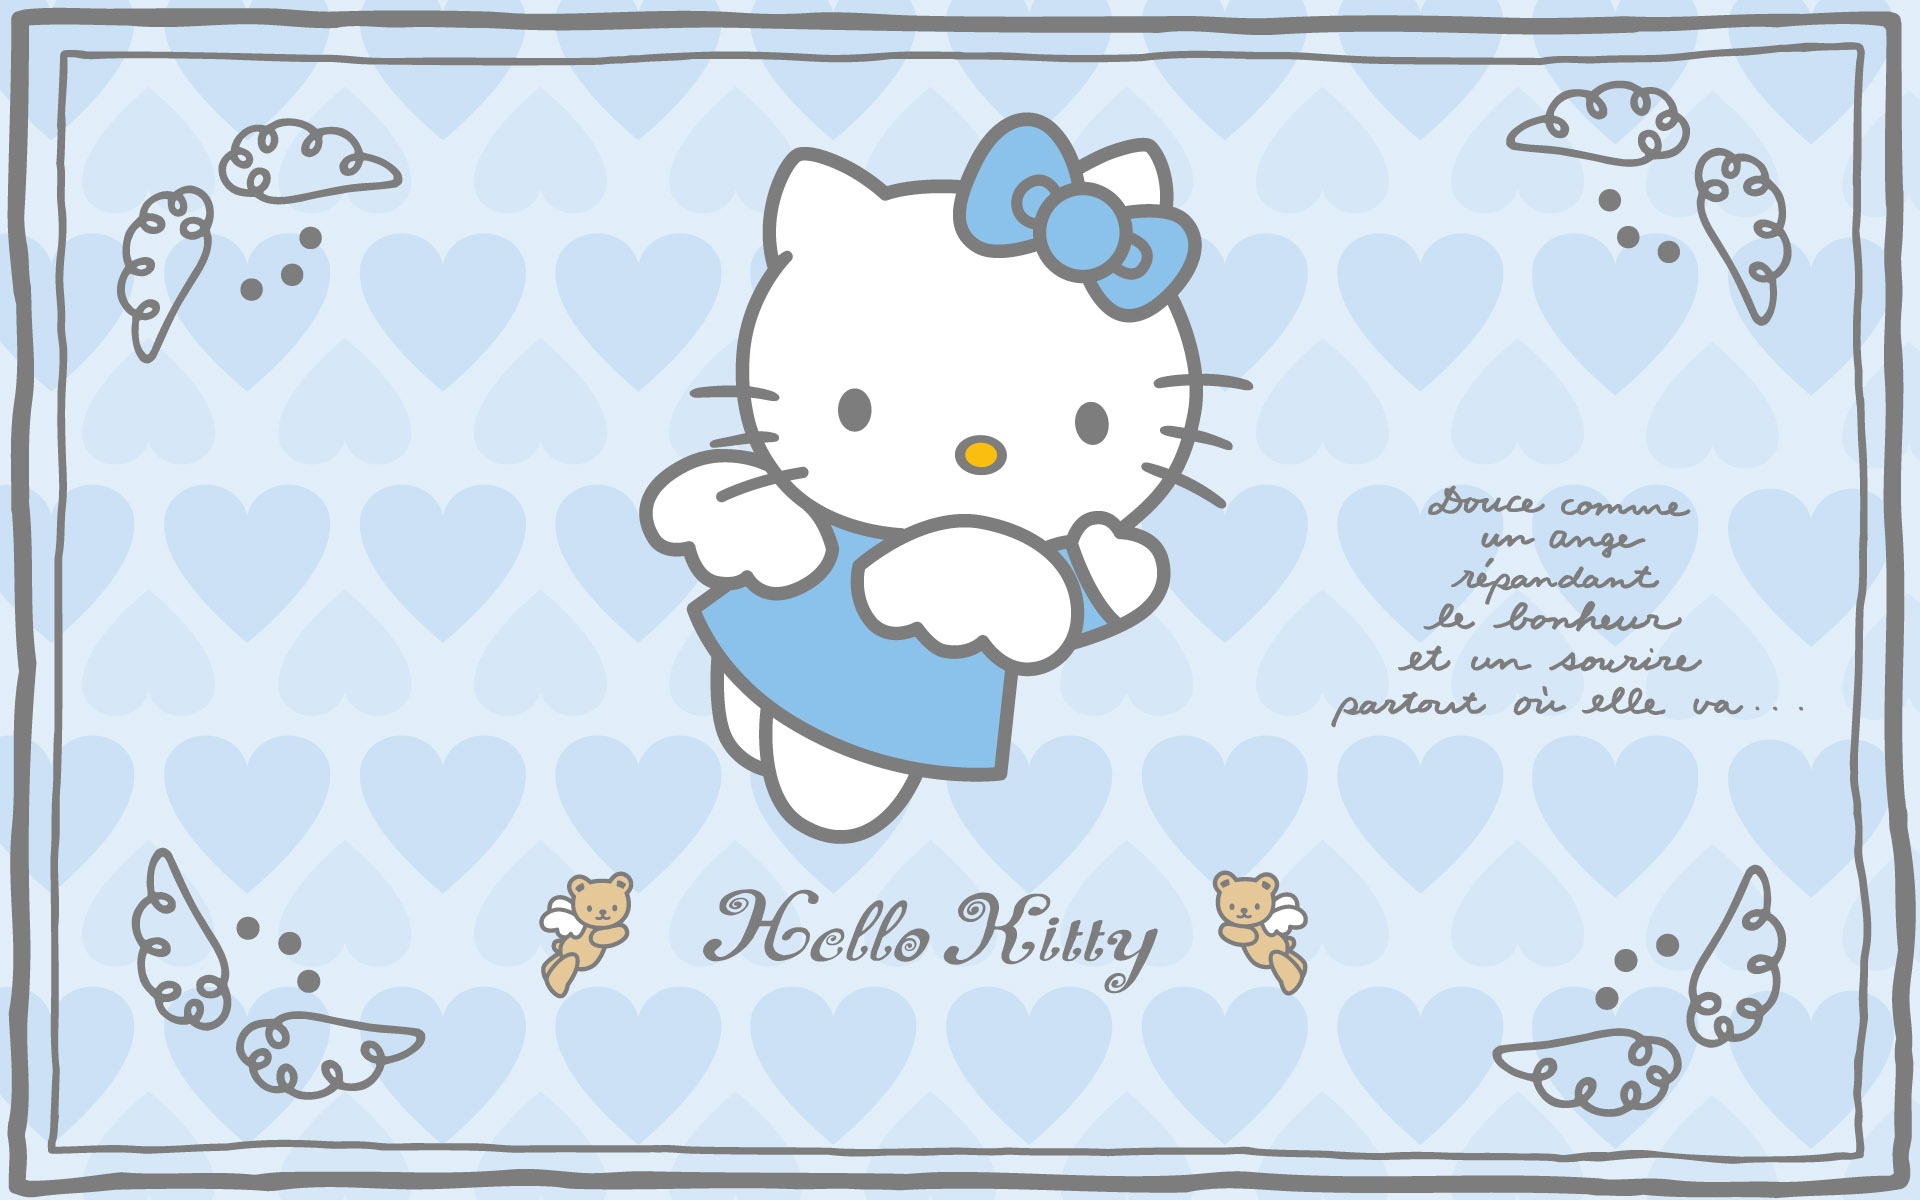 My blog: Cake Unyu Hello Kitty